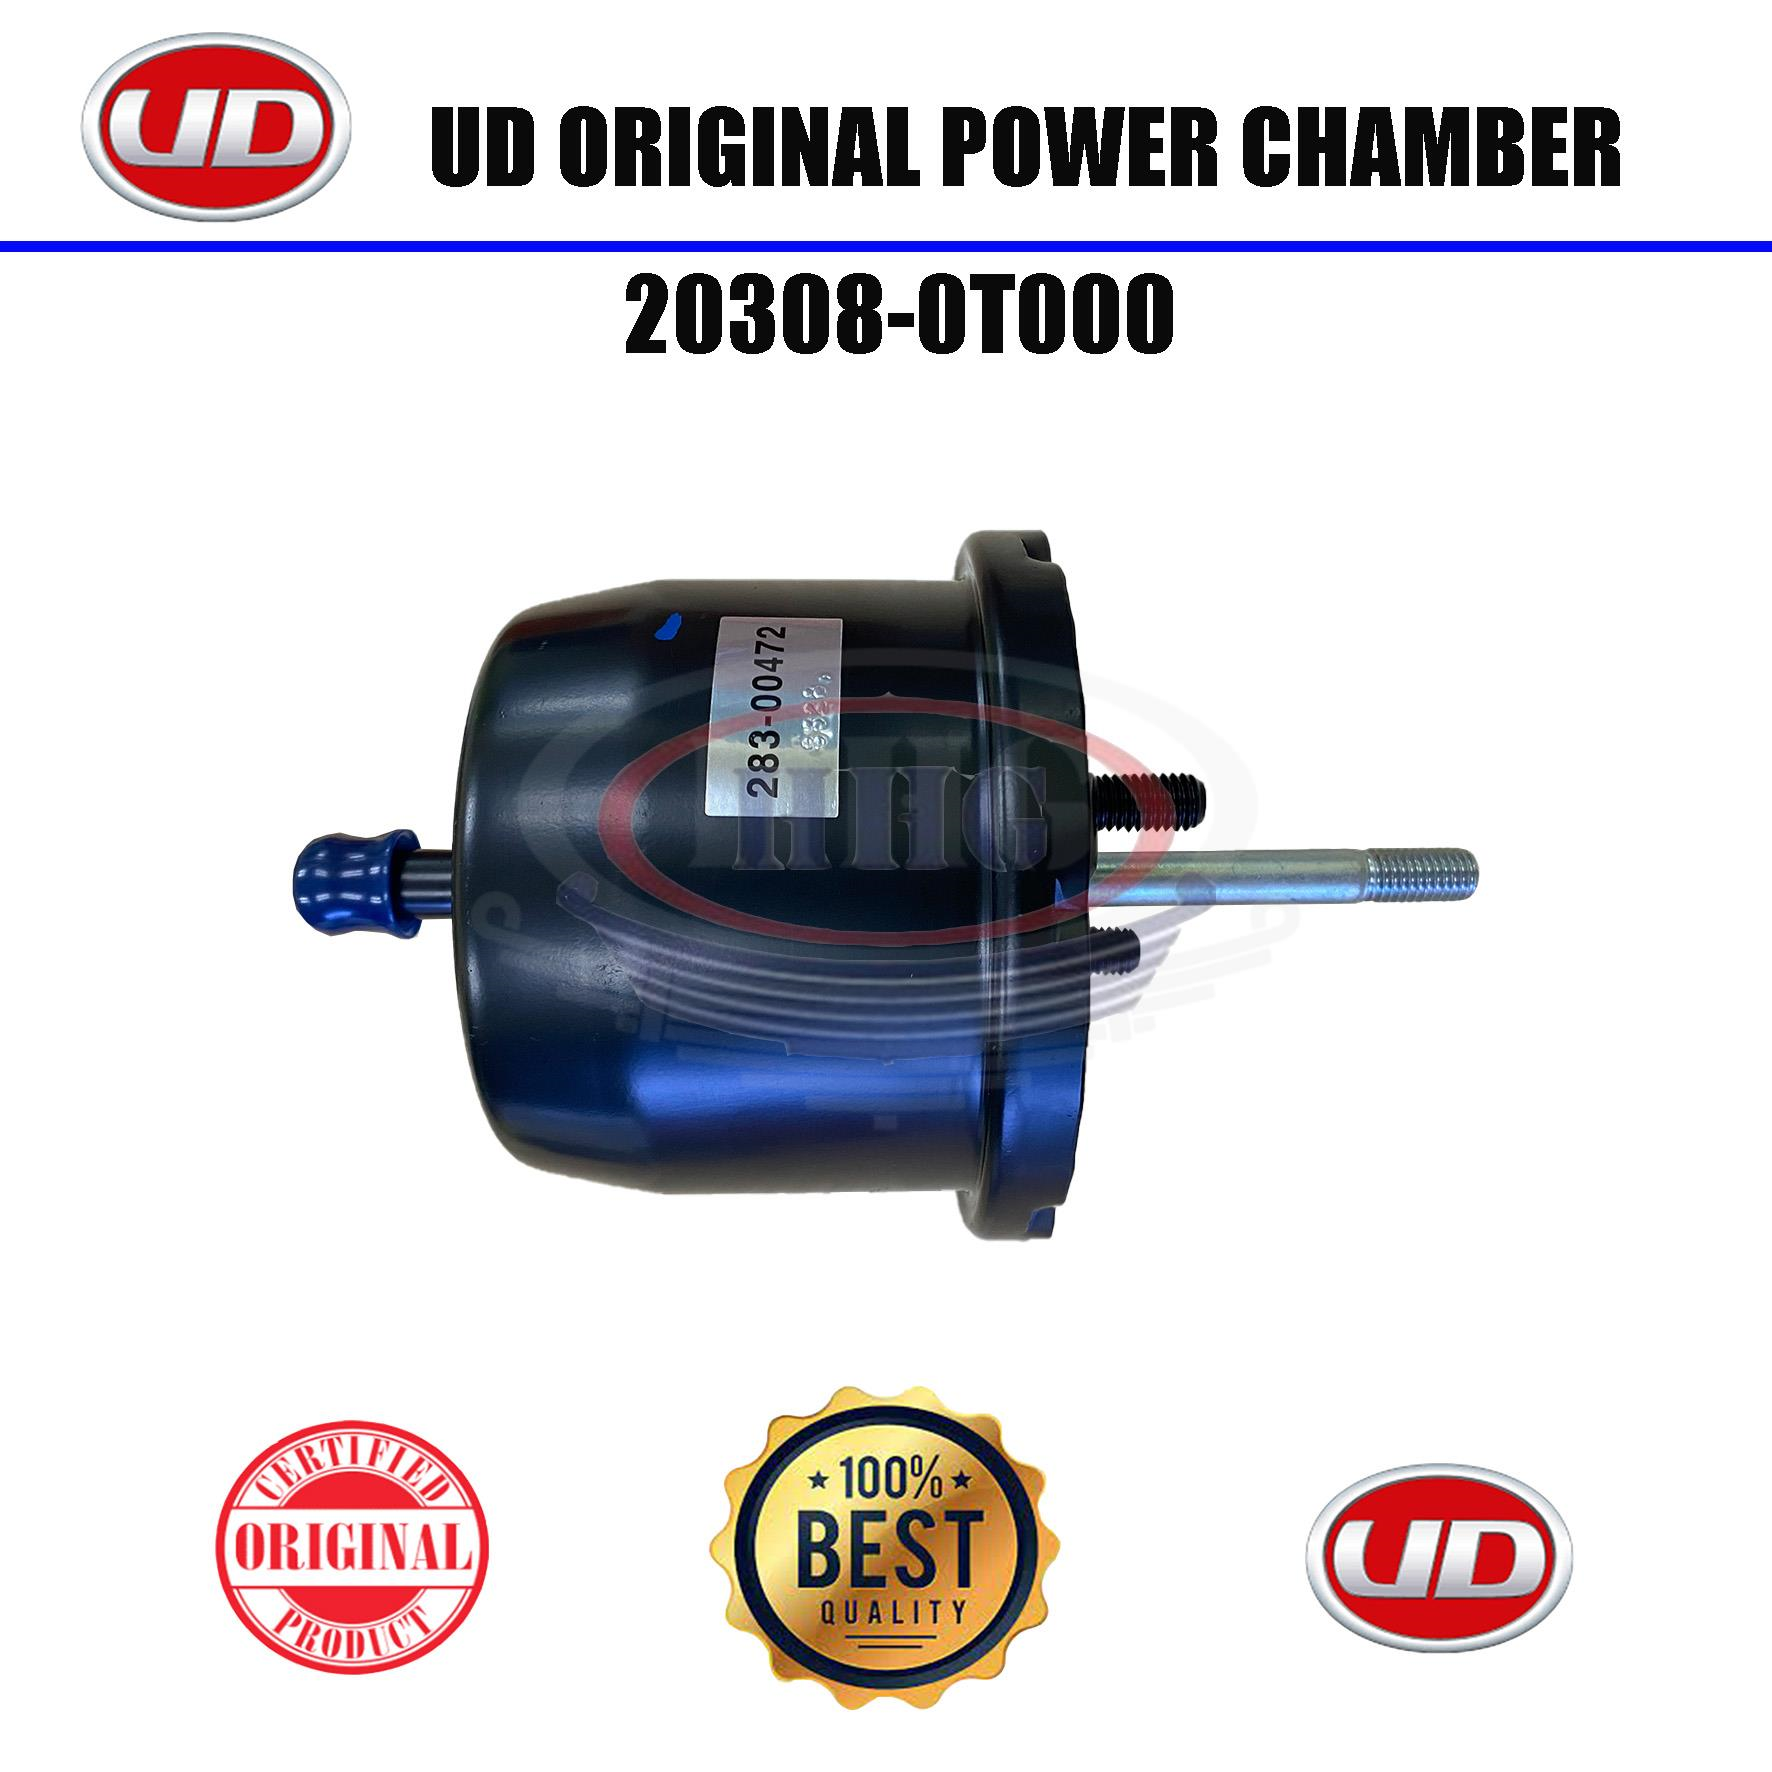 UD Original YU41 NU41 Power Chamber (20308-0T000)